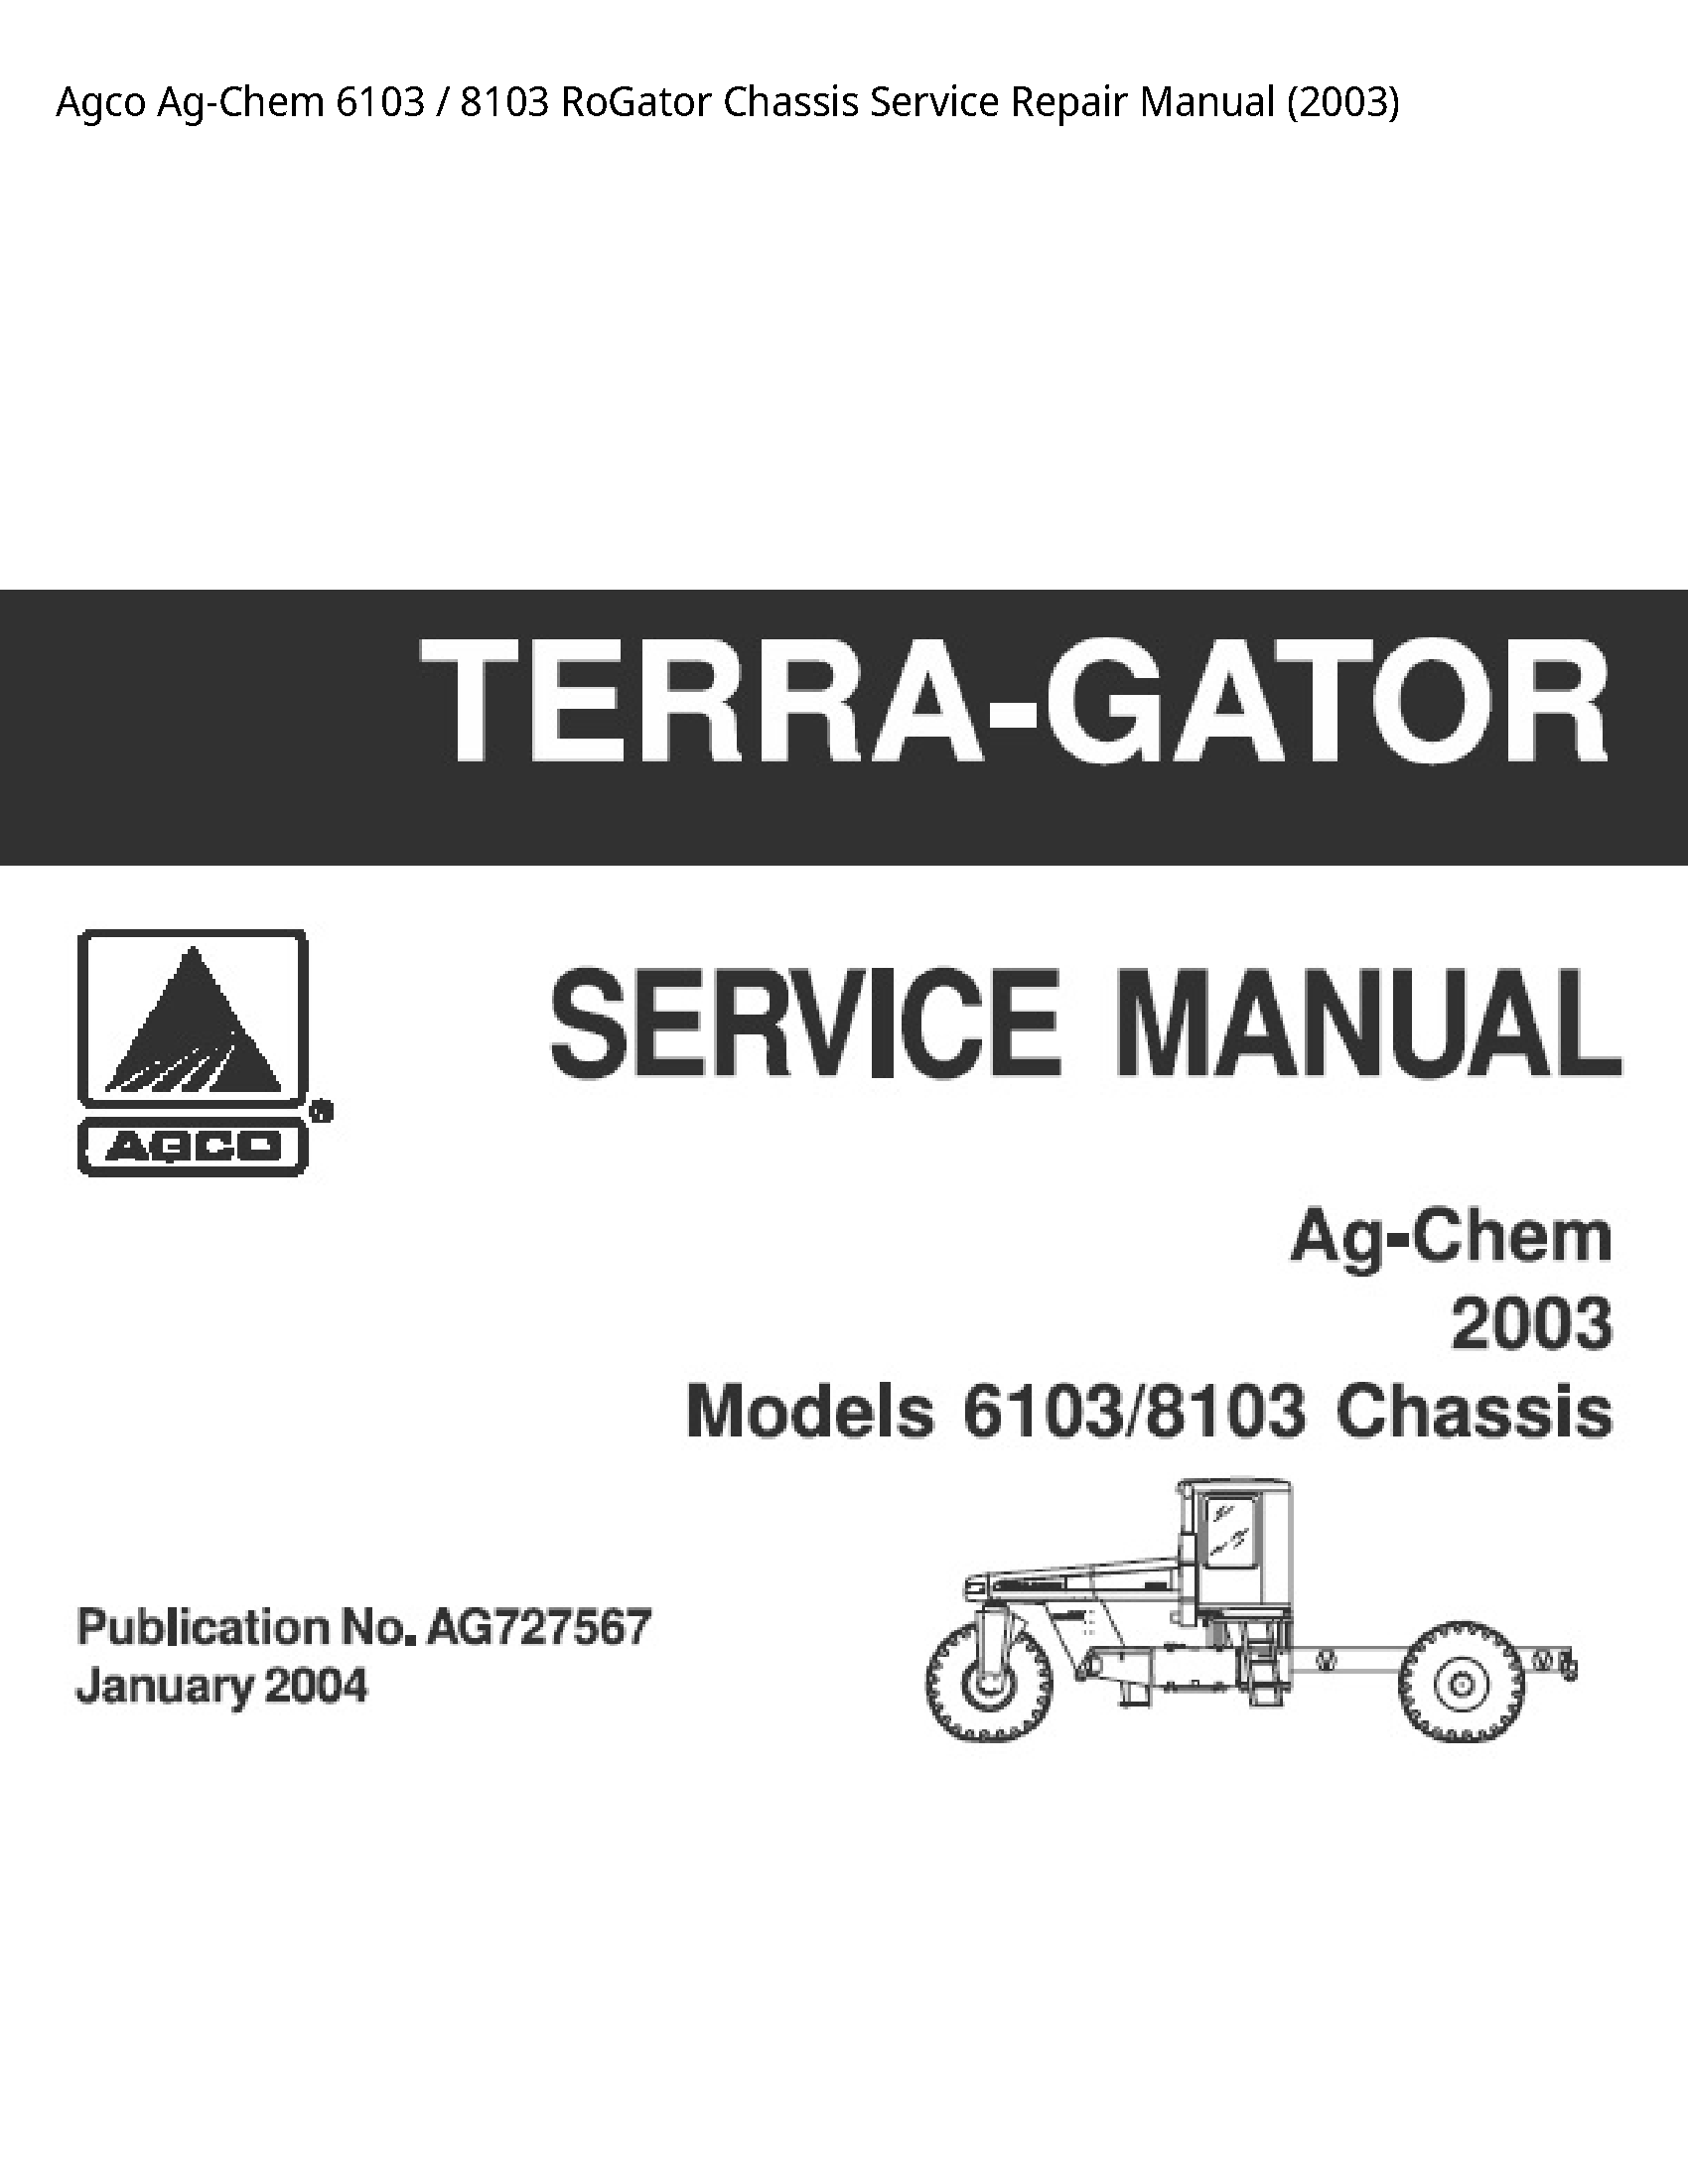 AGCO 6103 Ag-Chem RoGator Chassis manual